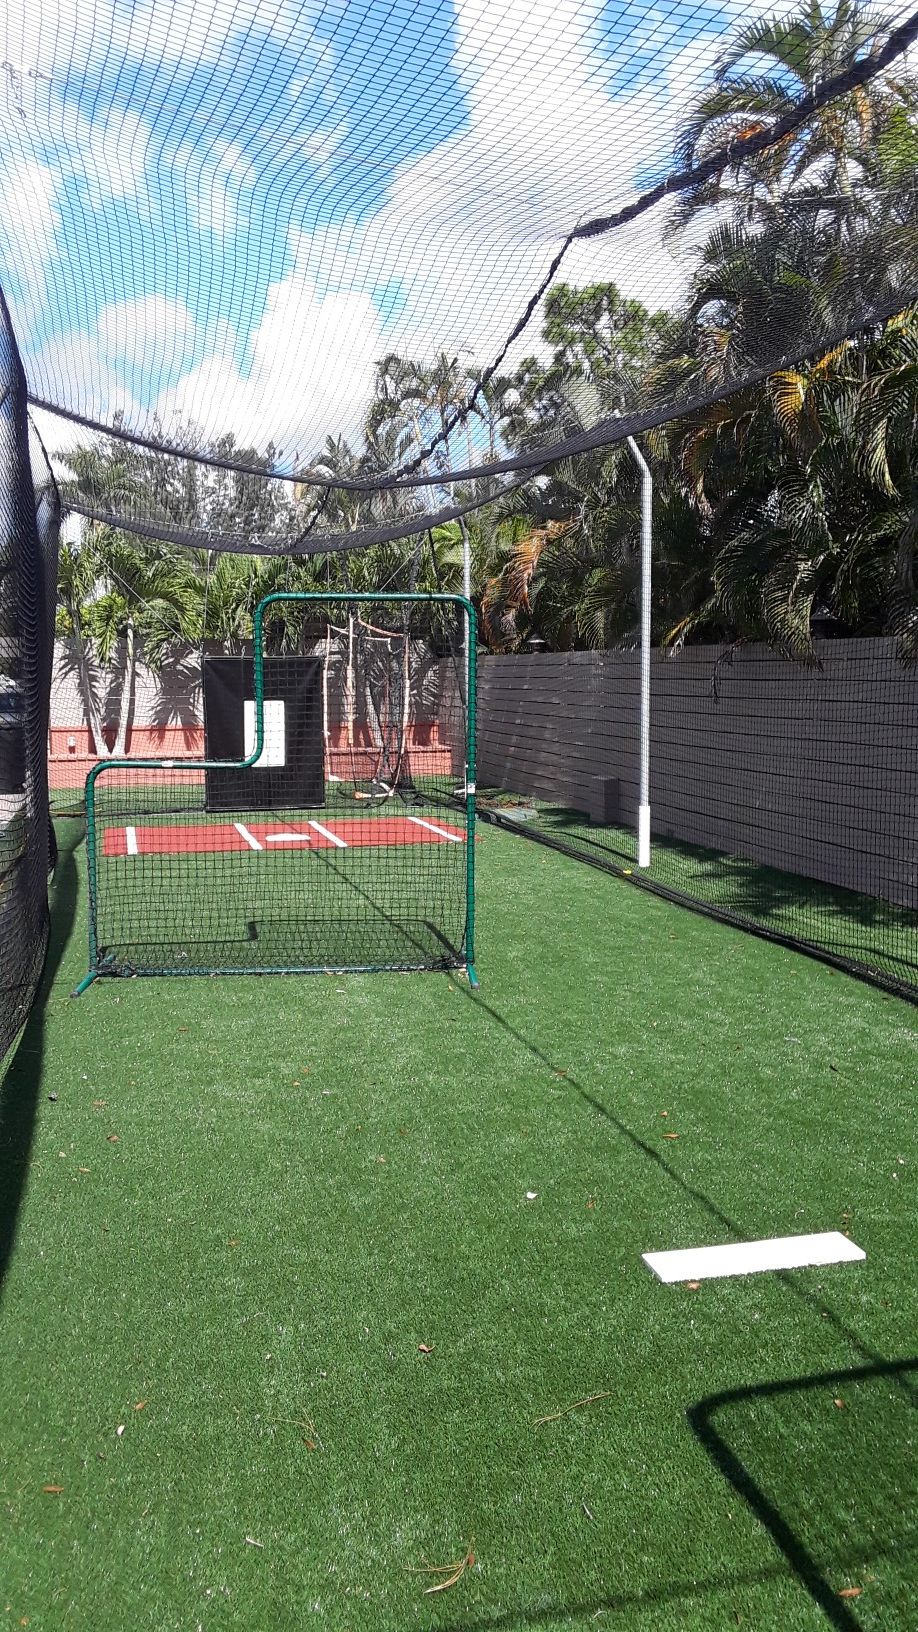 Professional baseball/softball batting cage